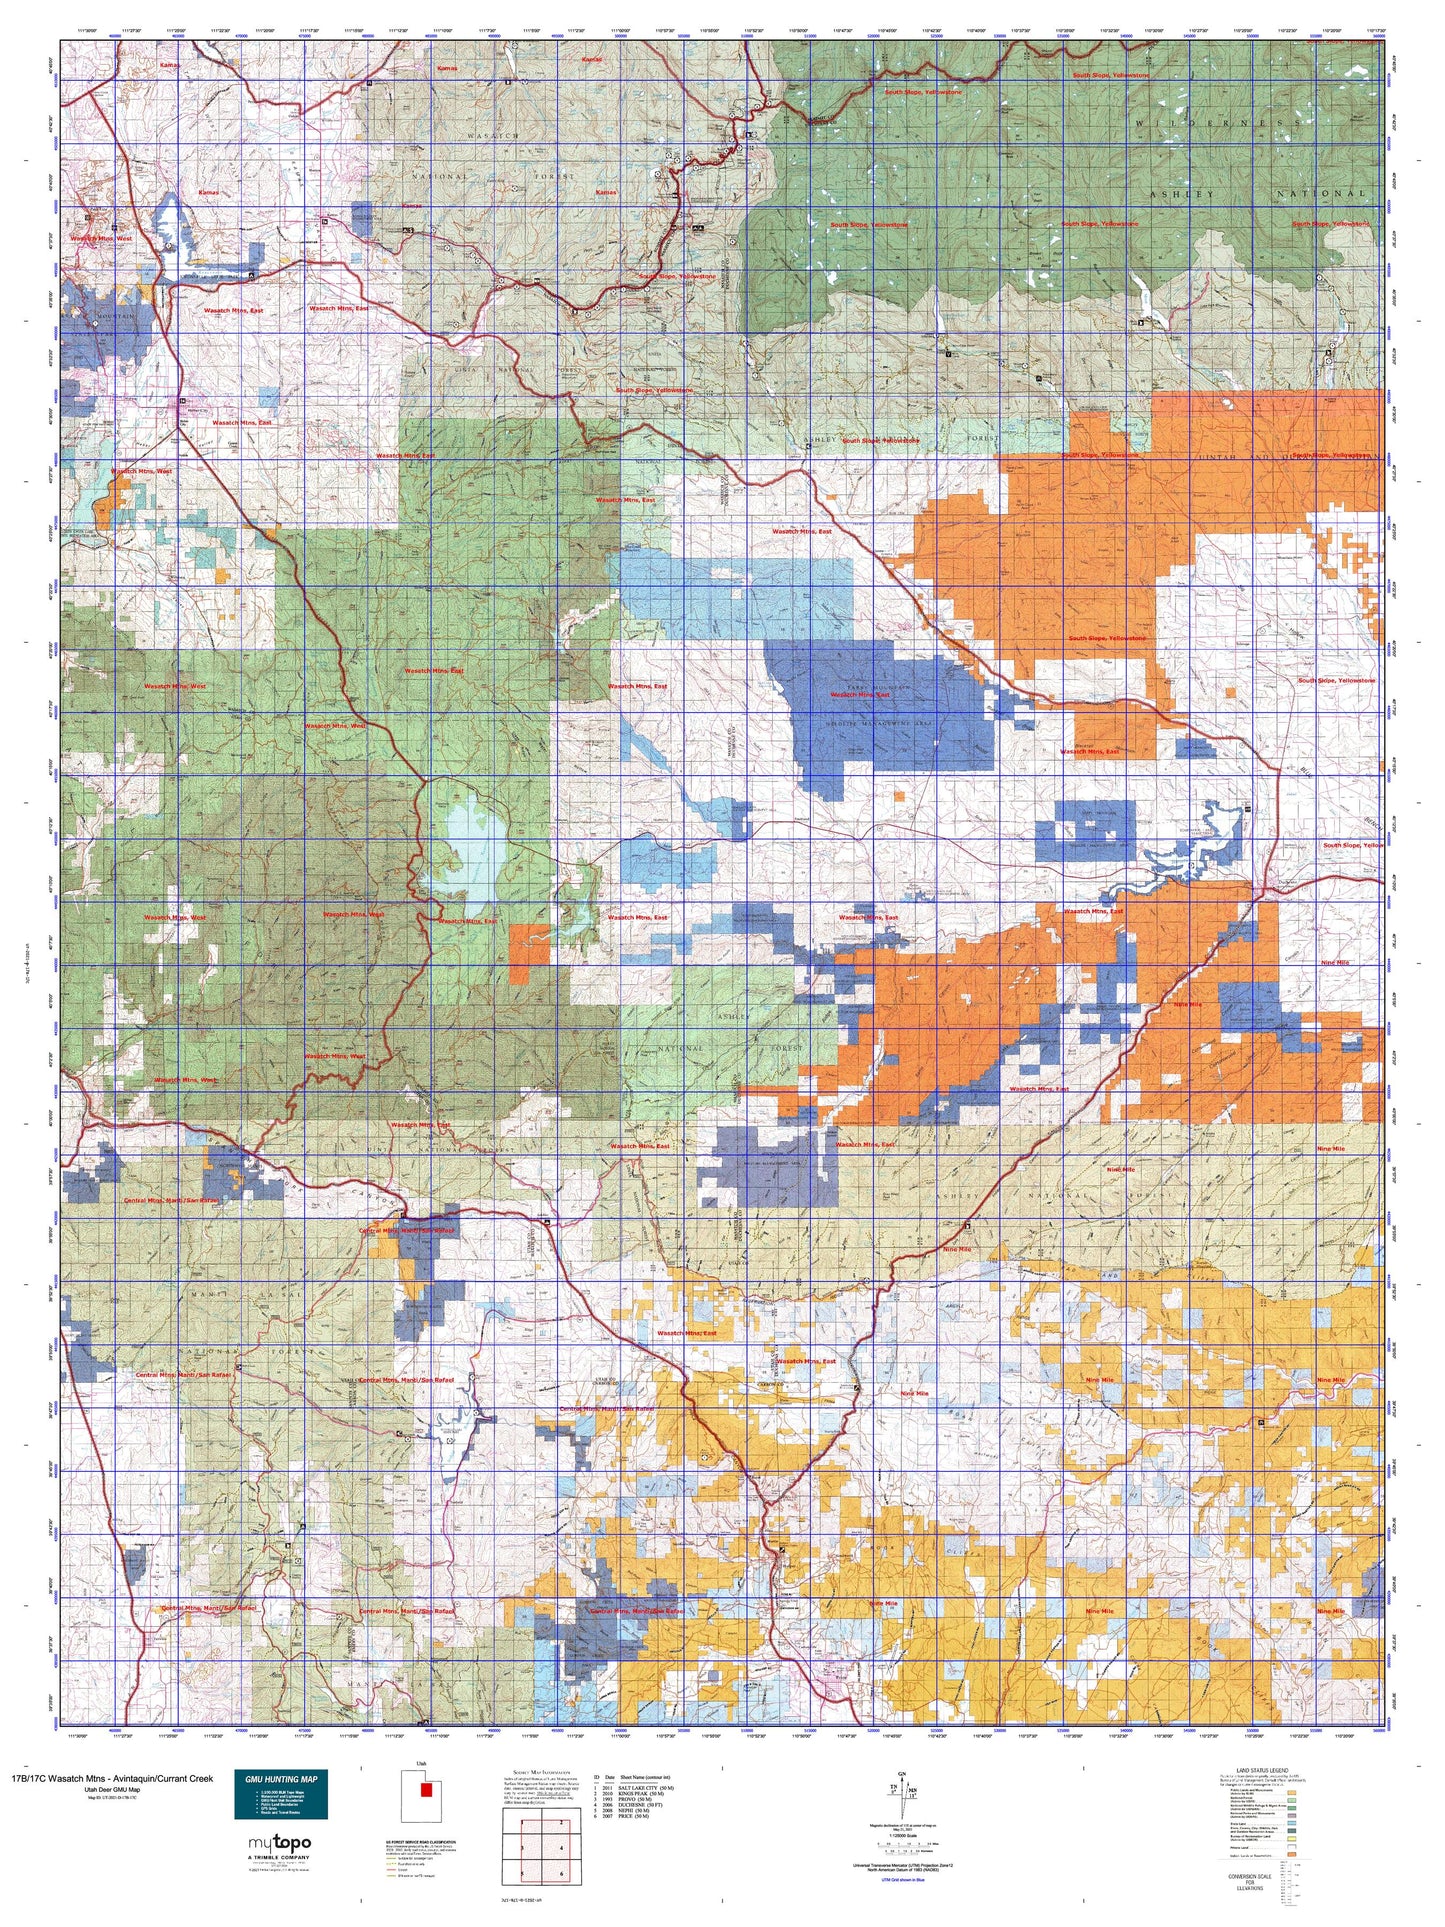 Utah Deer GMU 17B/17C Wasatch Mtns - Avintaquin/Currant Creek Map Image